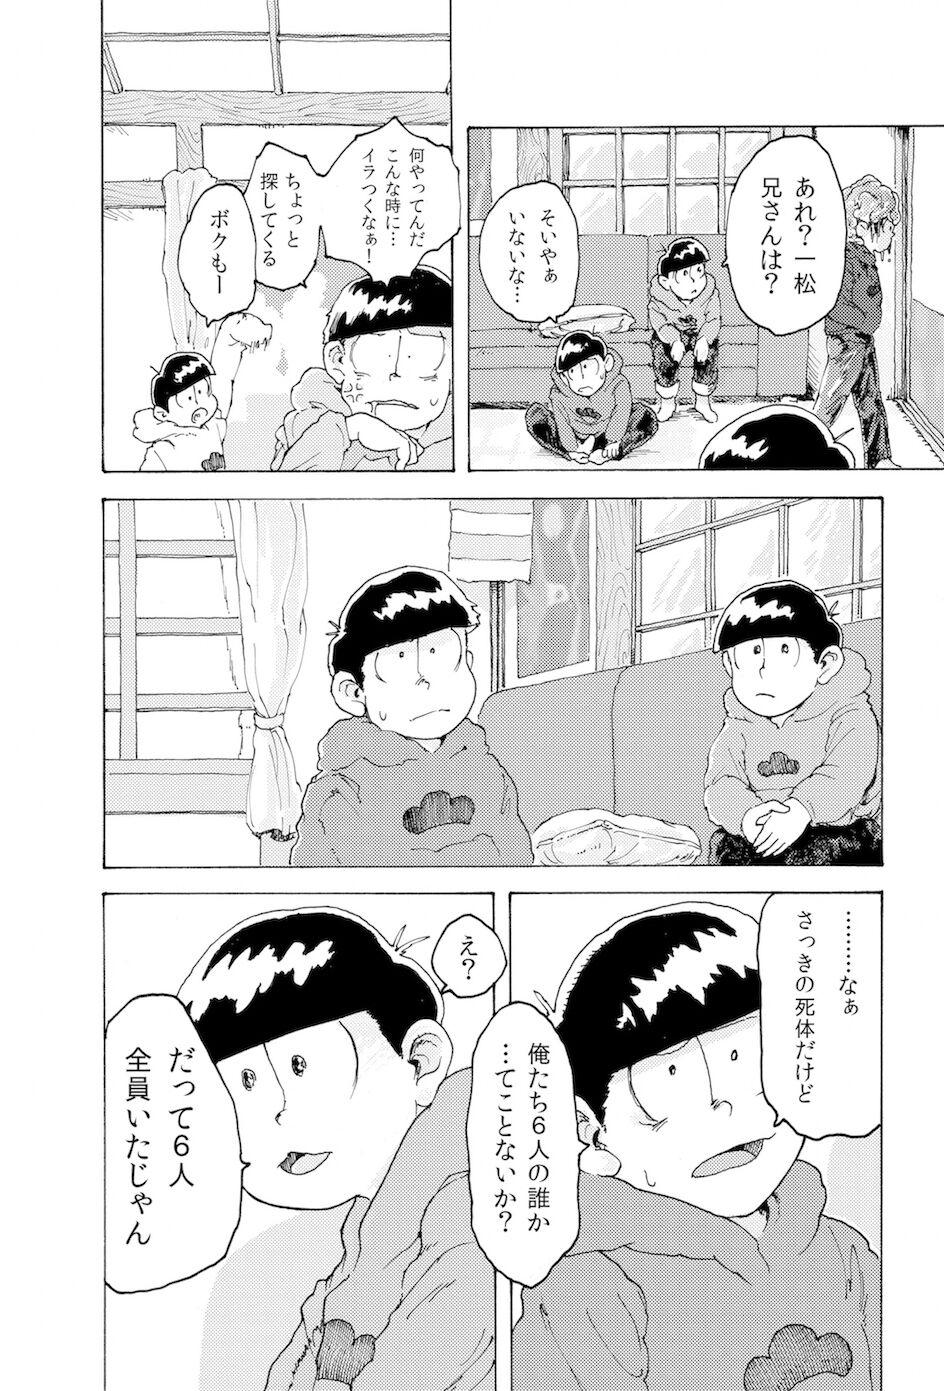 Breasts [Koshigerunasunibusu] WEB Sairoku [R18G] 'AIN'T SIX IS DEATH' - Osomatsu san Bedroom - Page 11